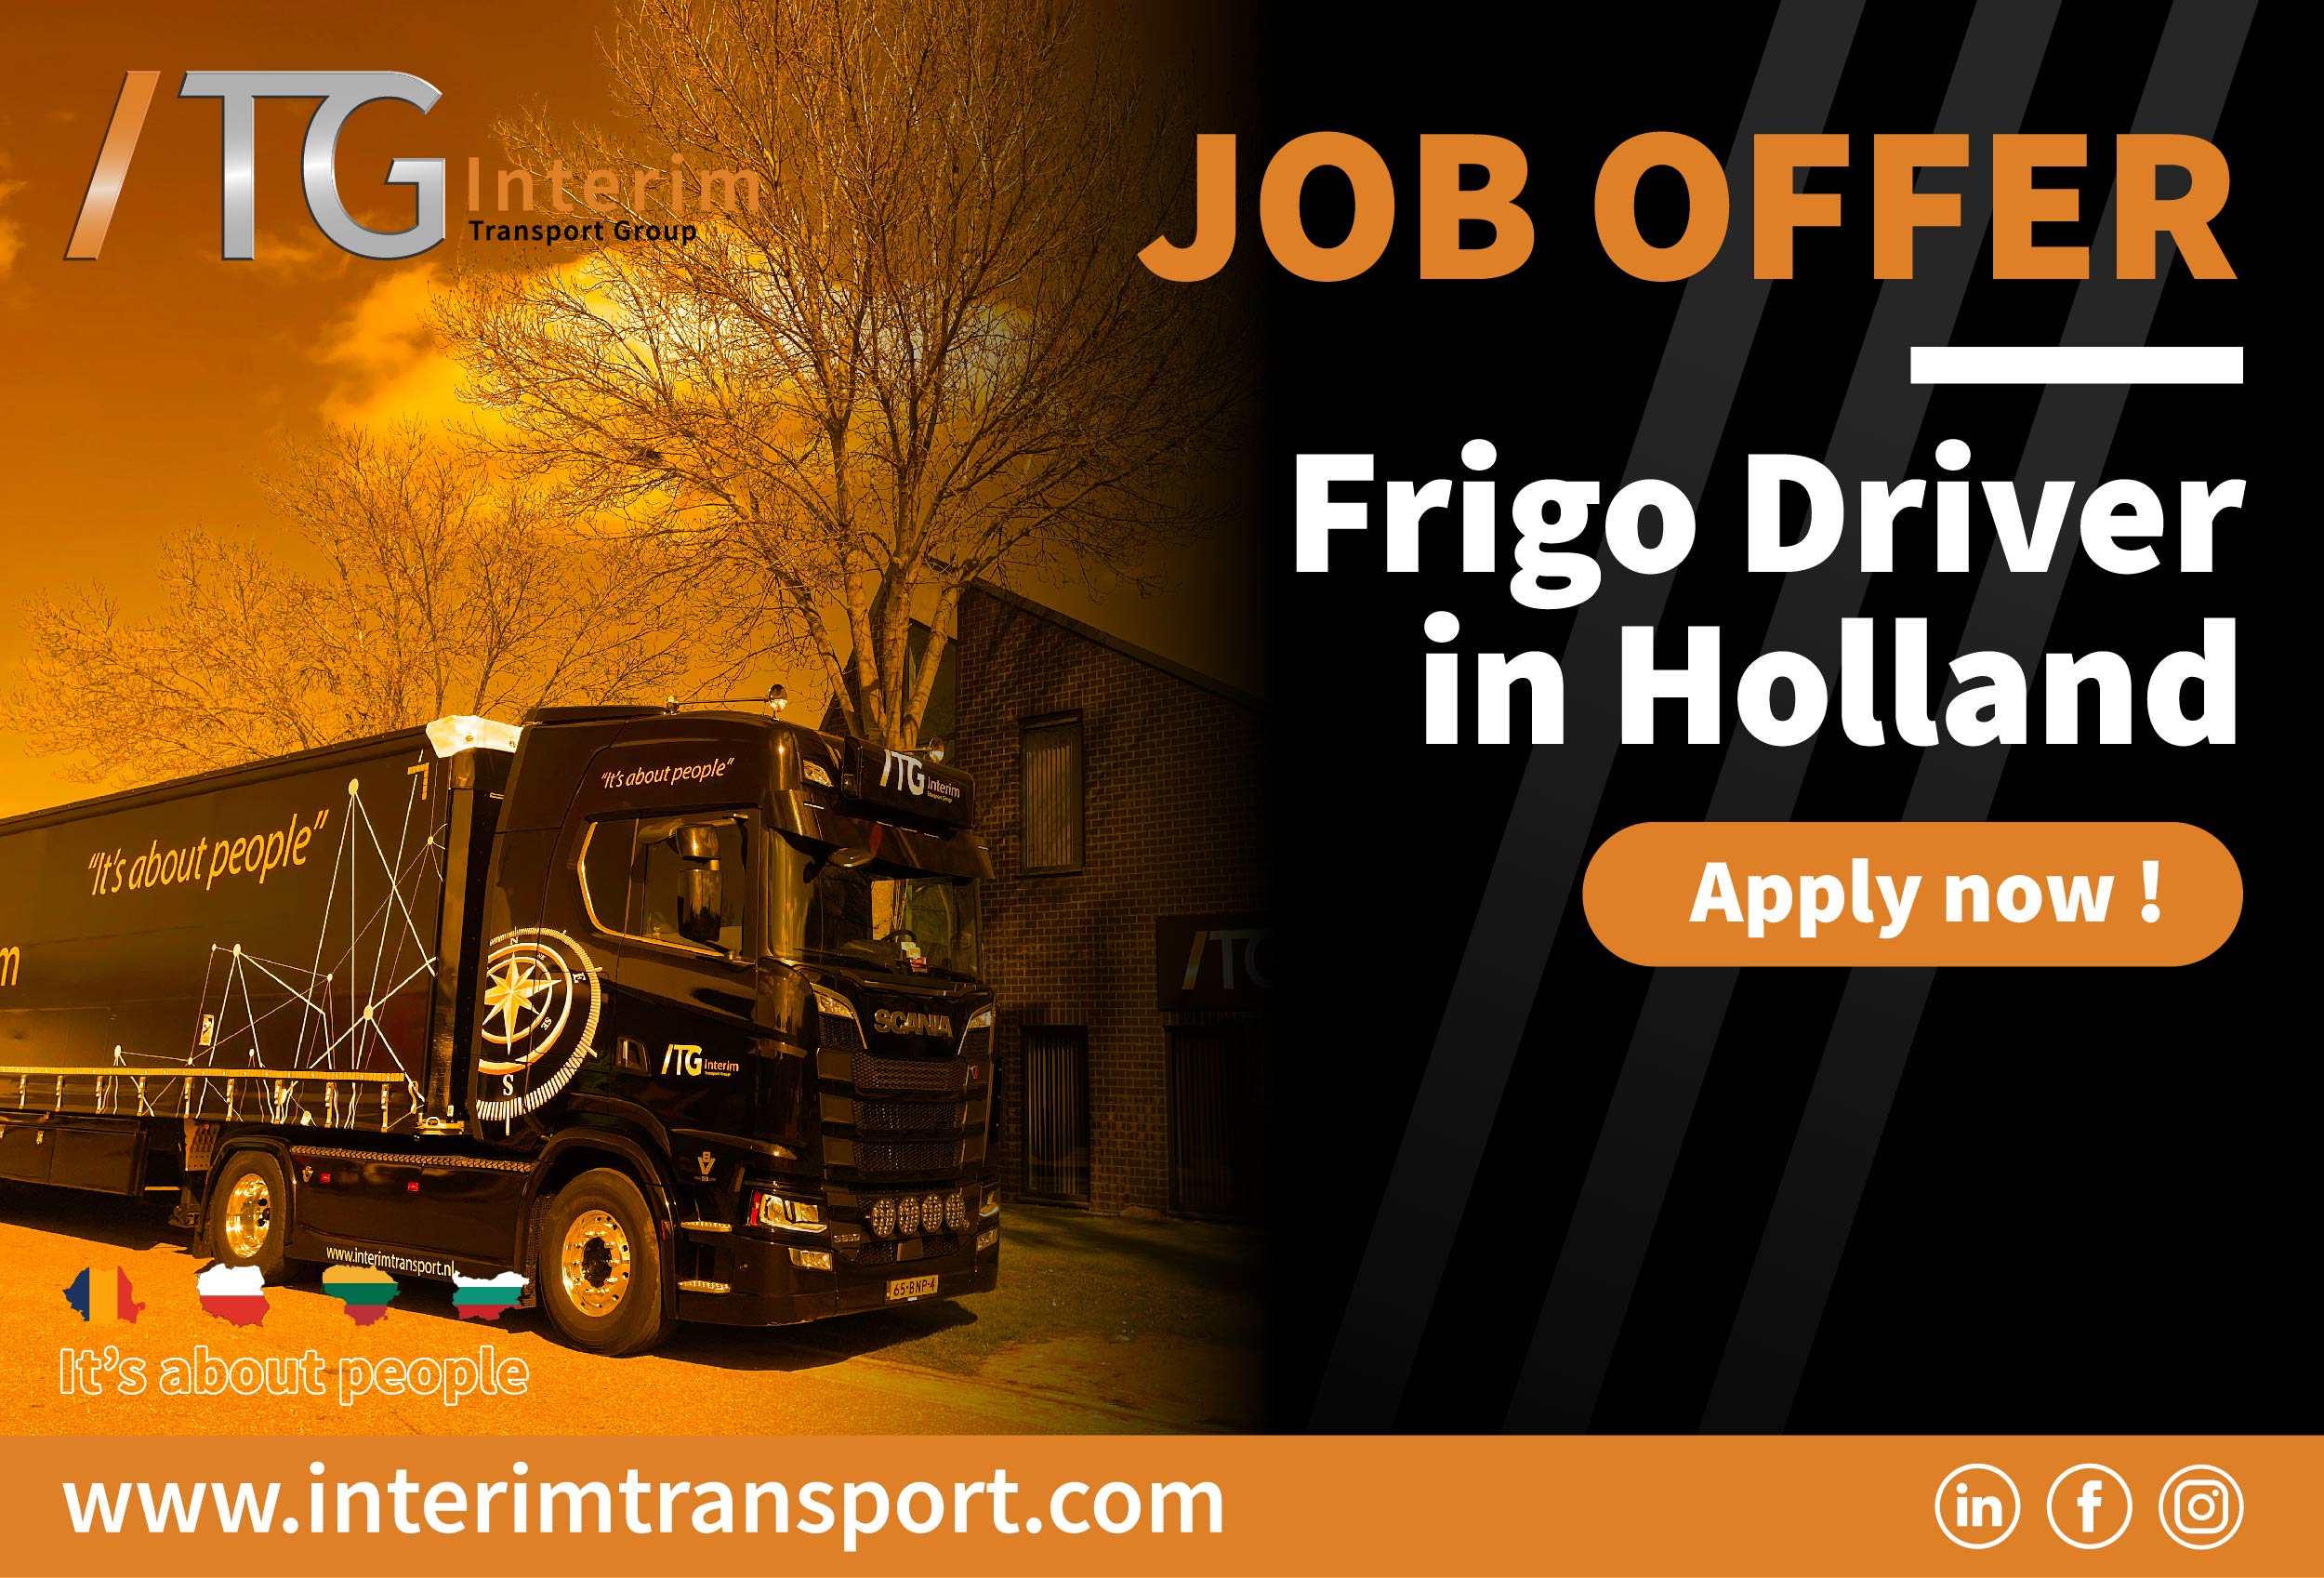 JOB OFFER | Frigo Driver in Holland